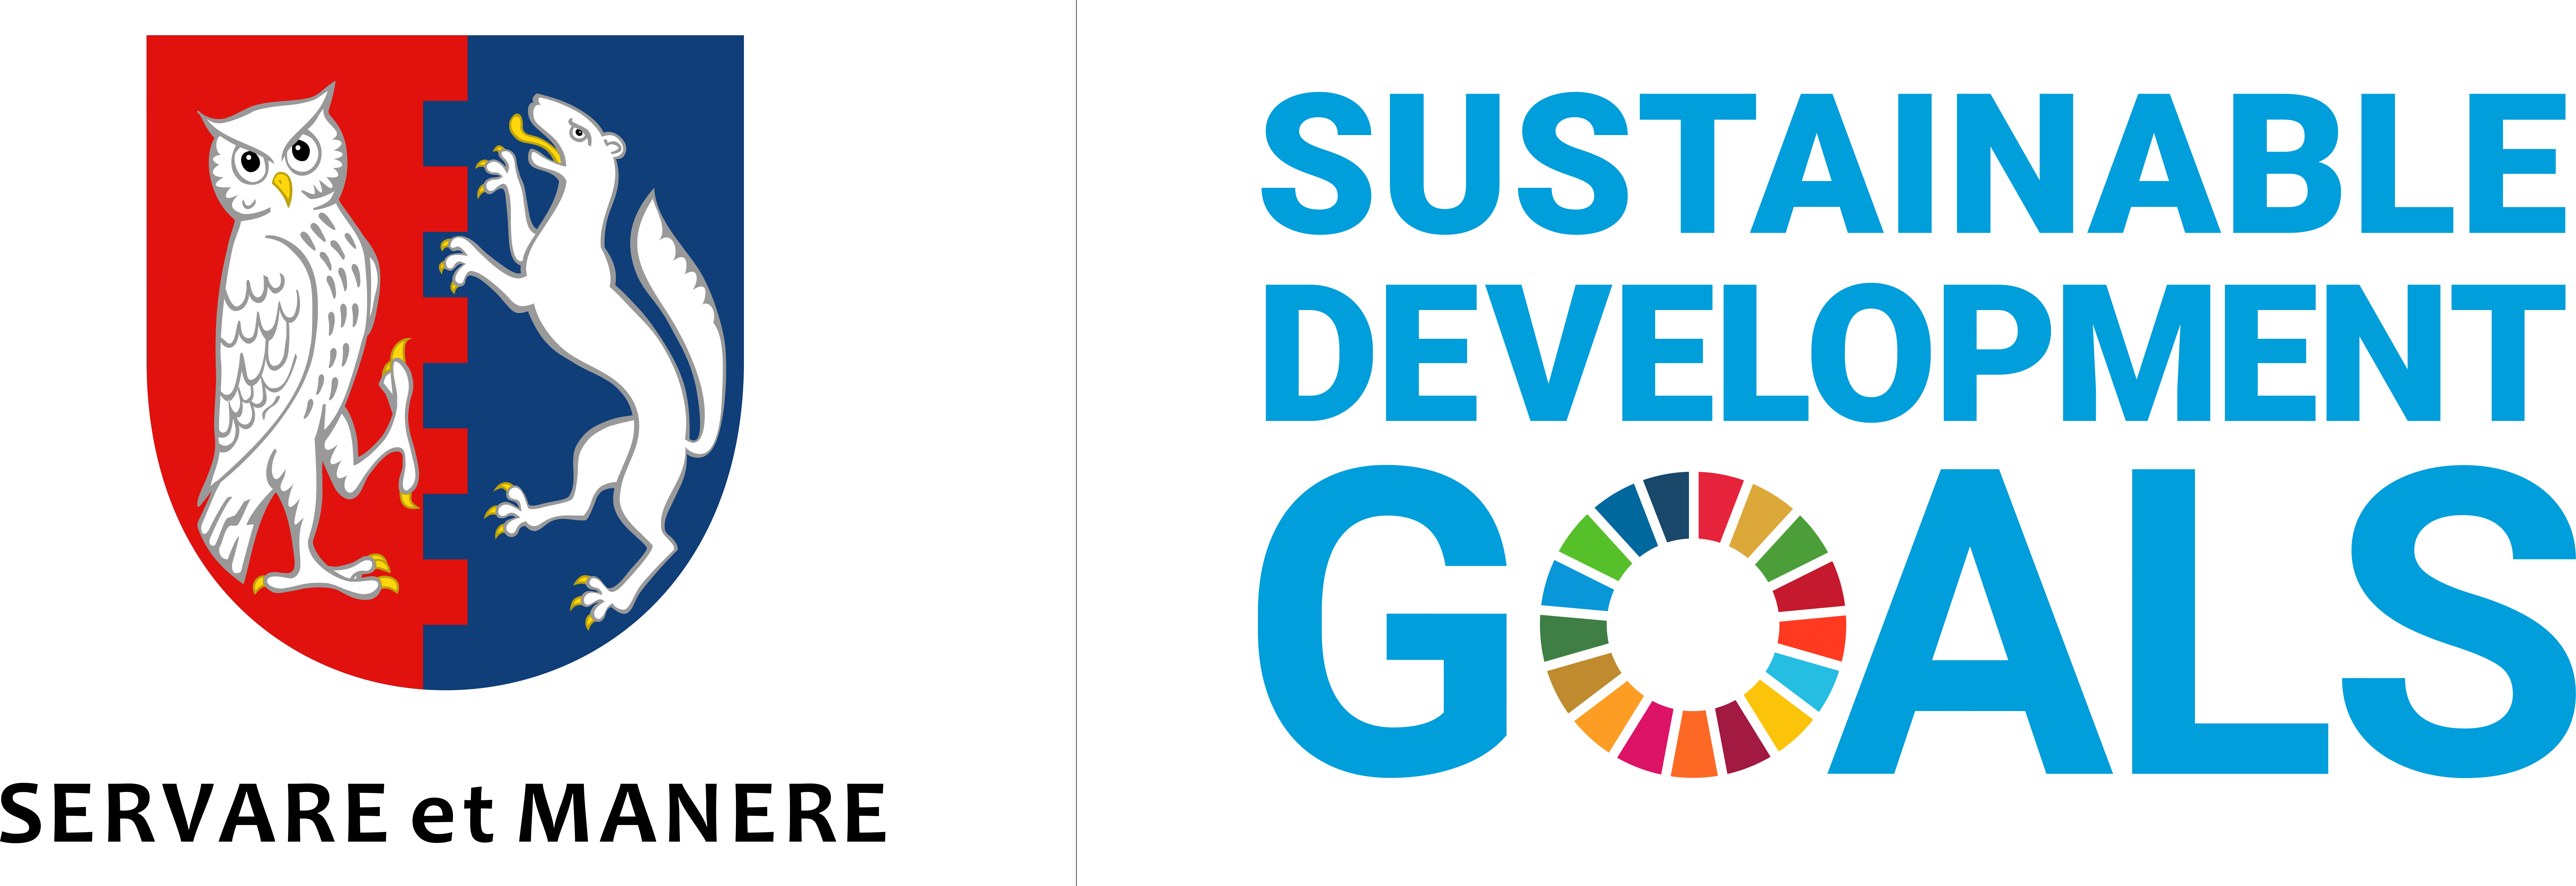 Sustainable Development Goals Tree of Peace Servare et Manere Strom pokoja